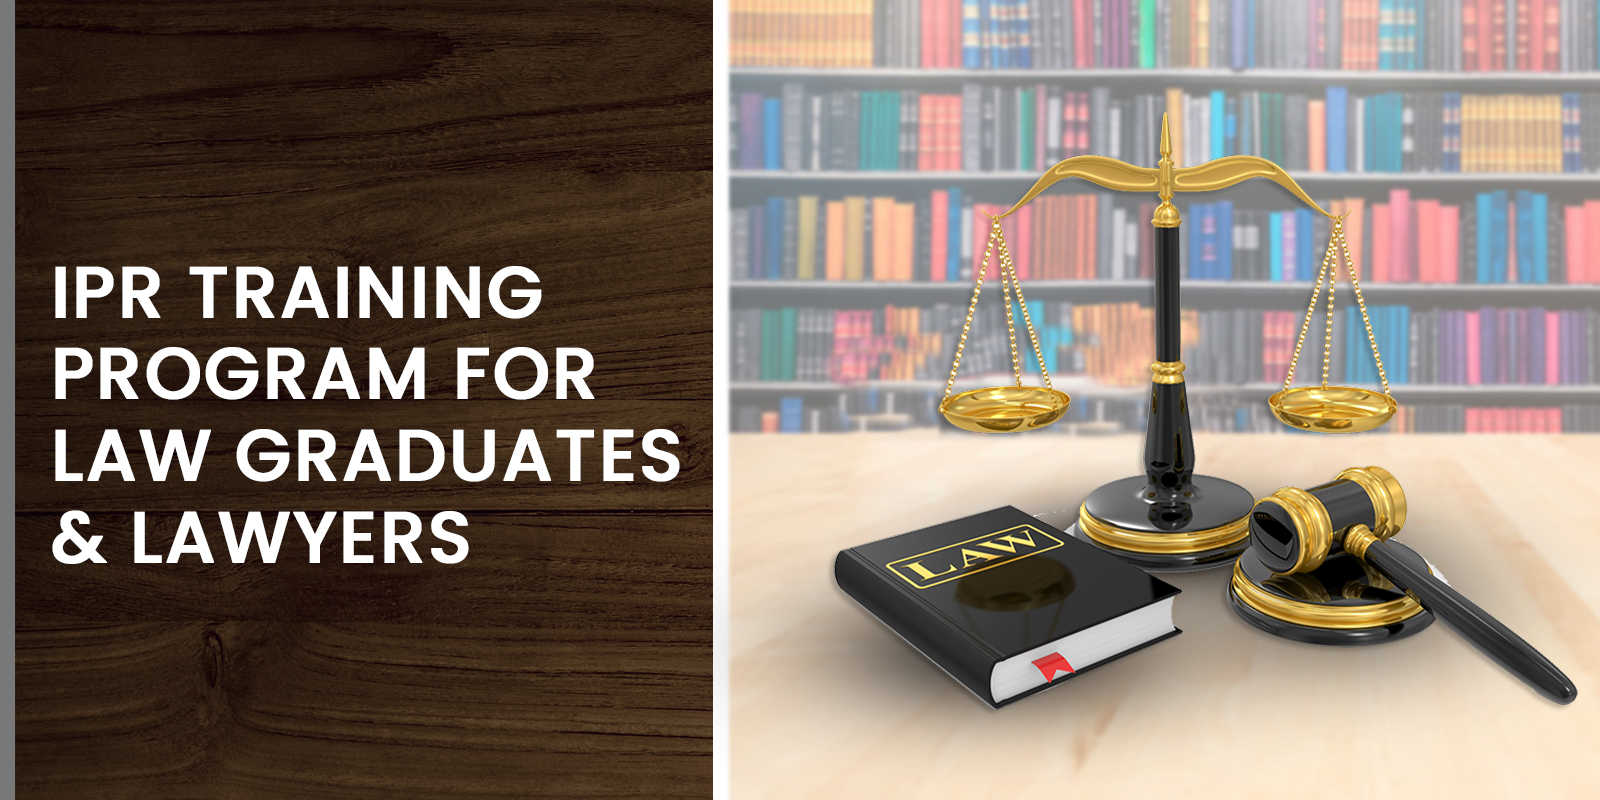 Ipr training program for law graduates & lawyers